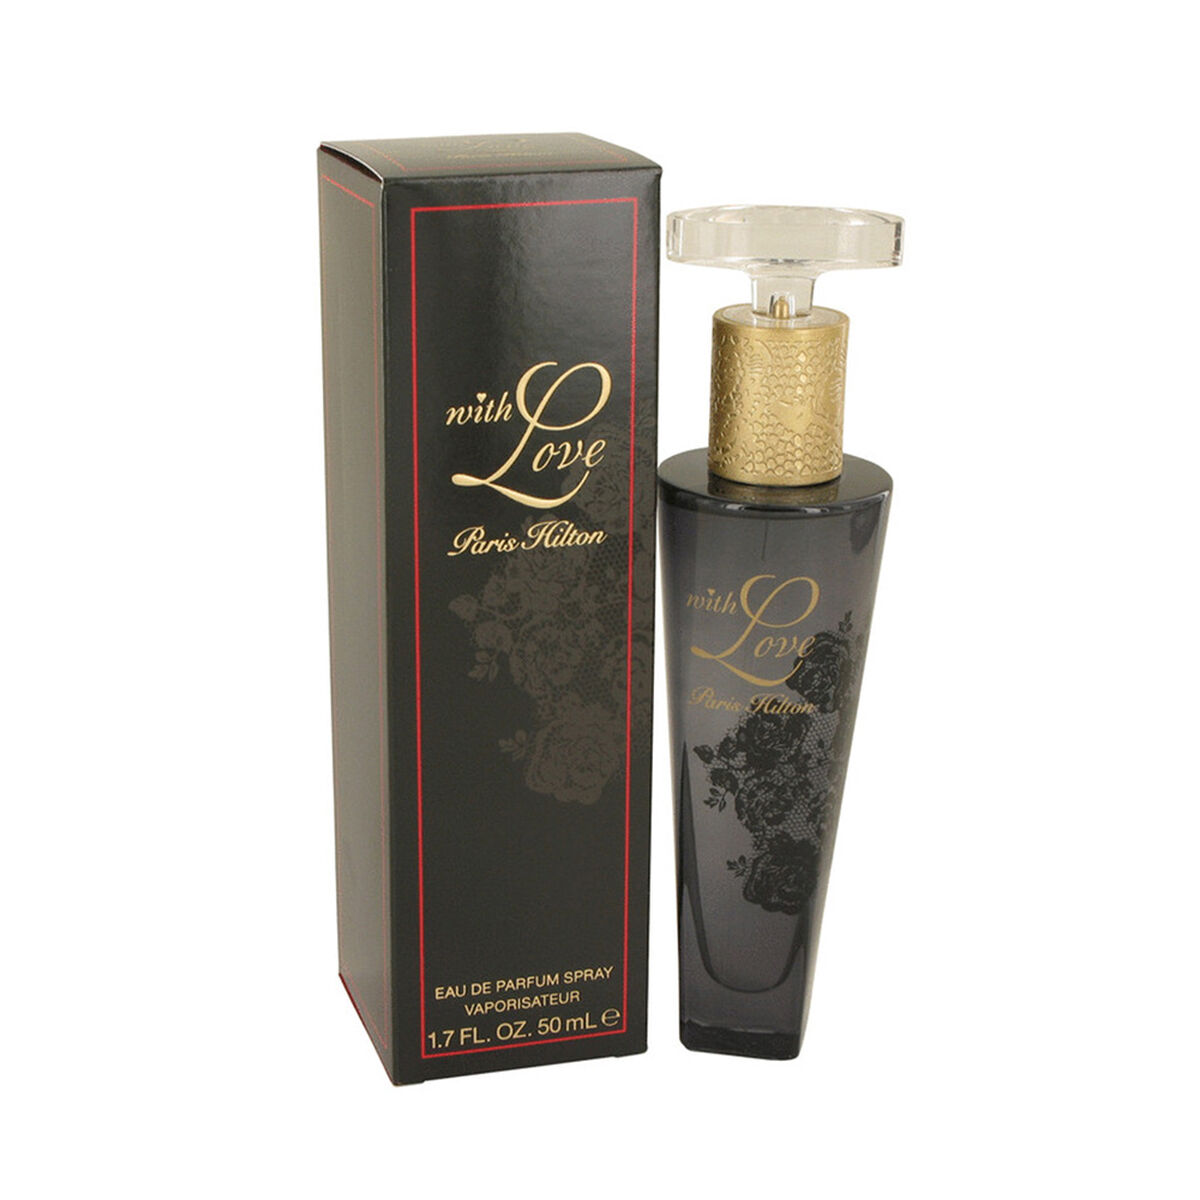 Perfume Paris Hilton White Love EDP 100 ml